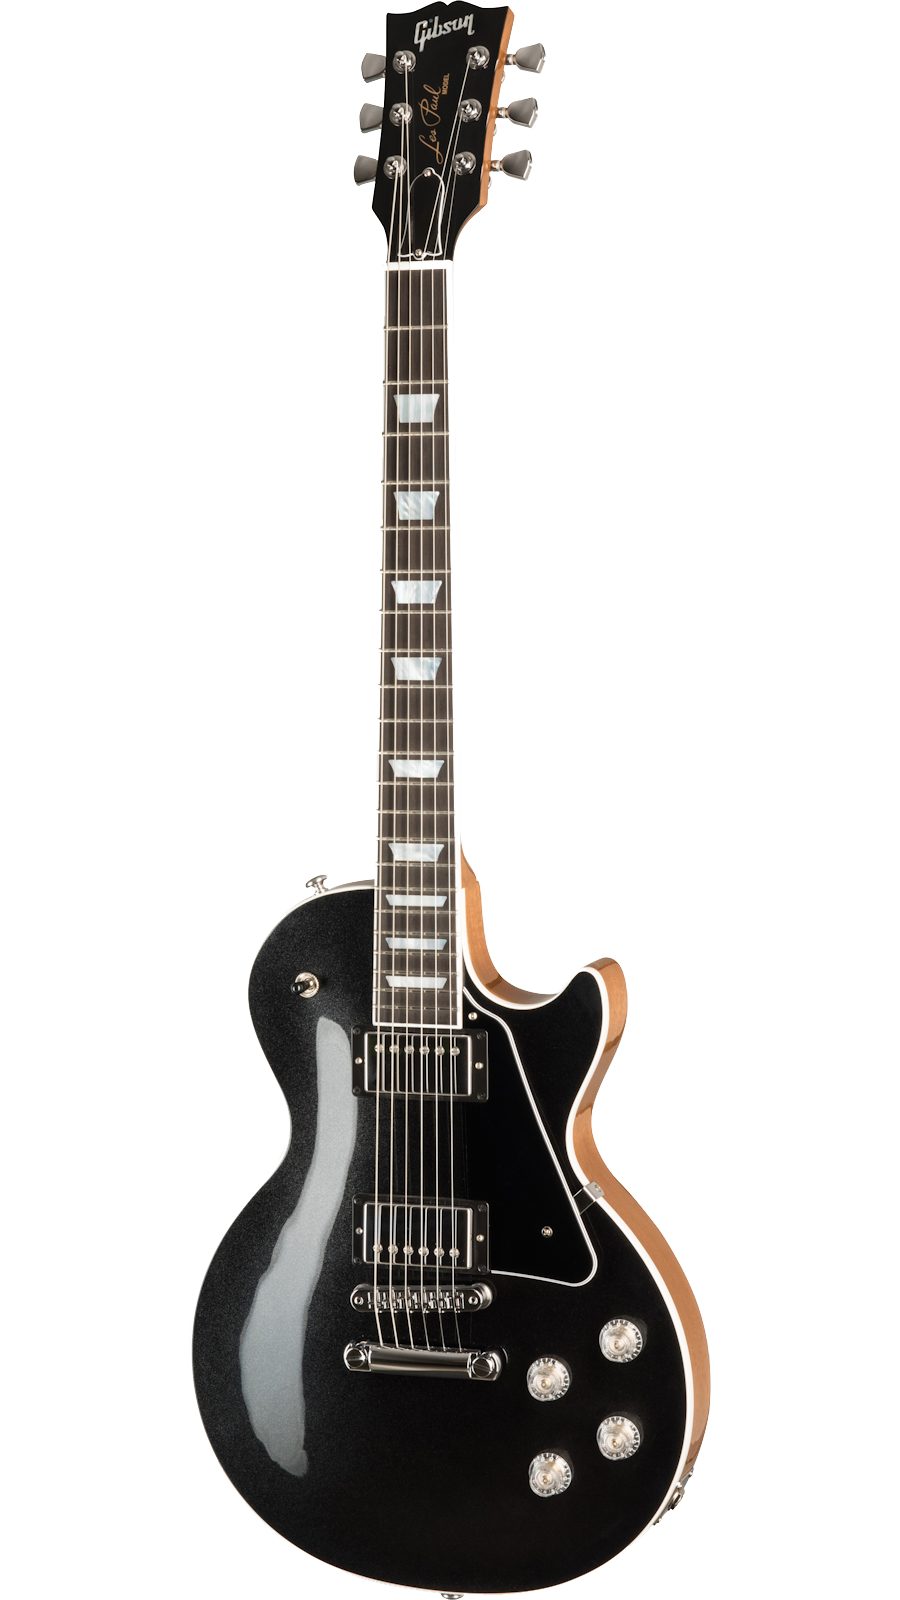 Gibson Les Paul Modern electric guitar in Graphite black Tone Shop Guitars Dallas TX